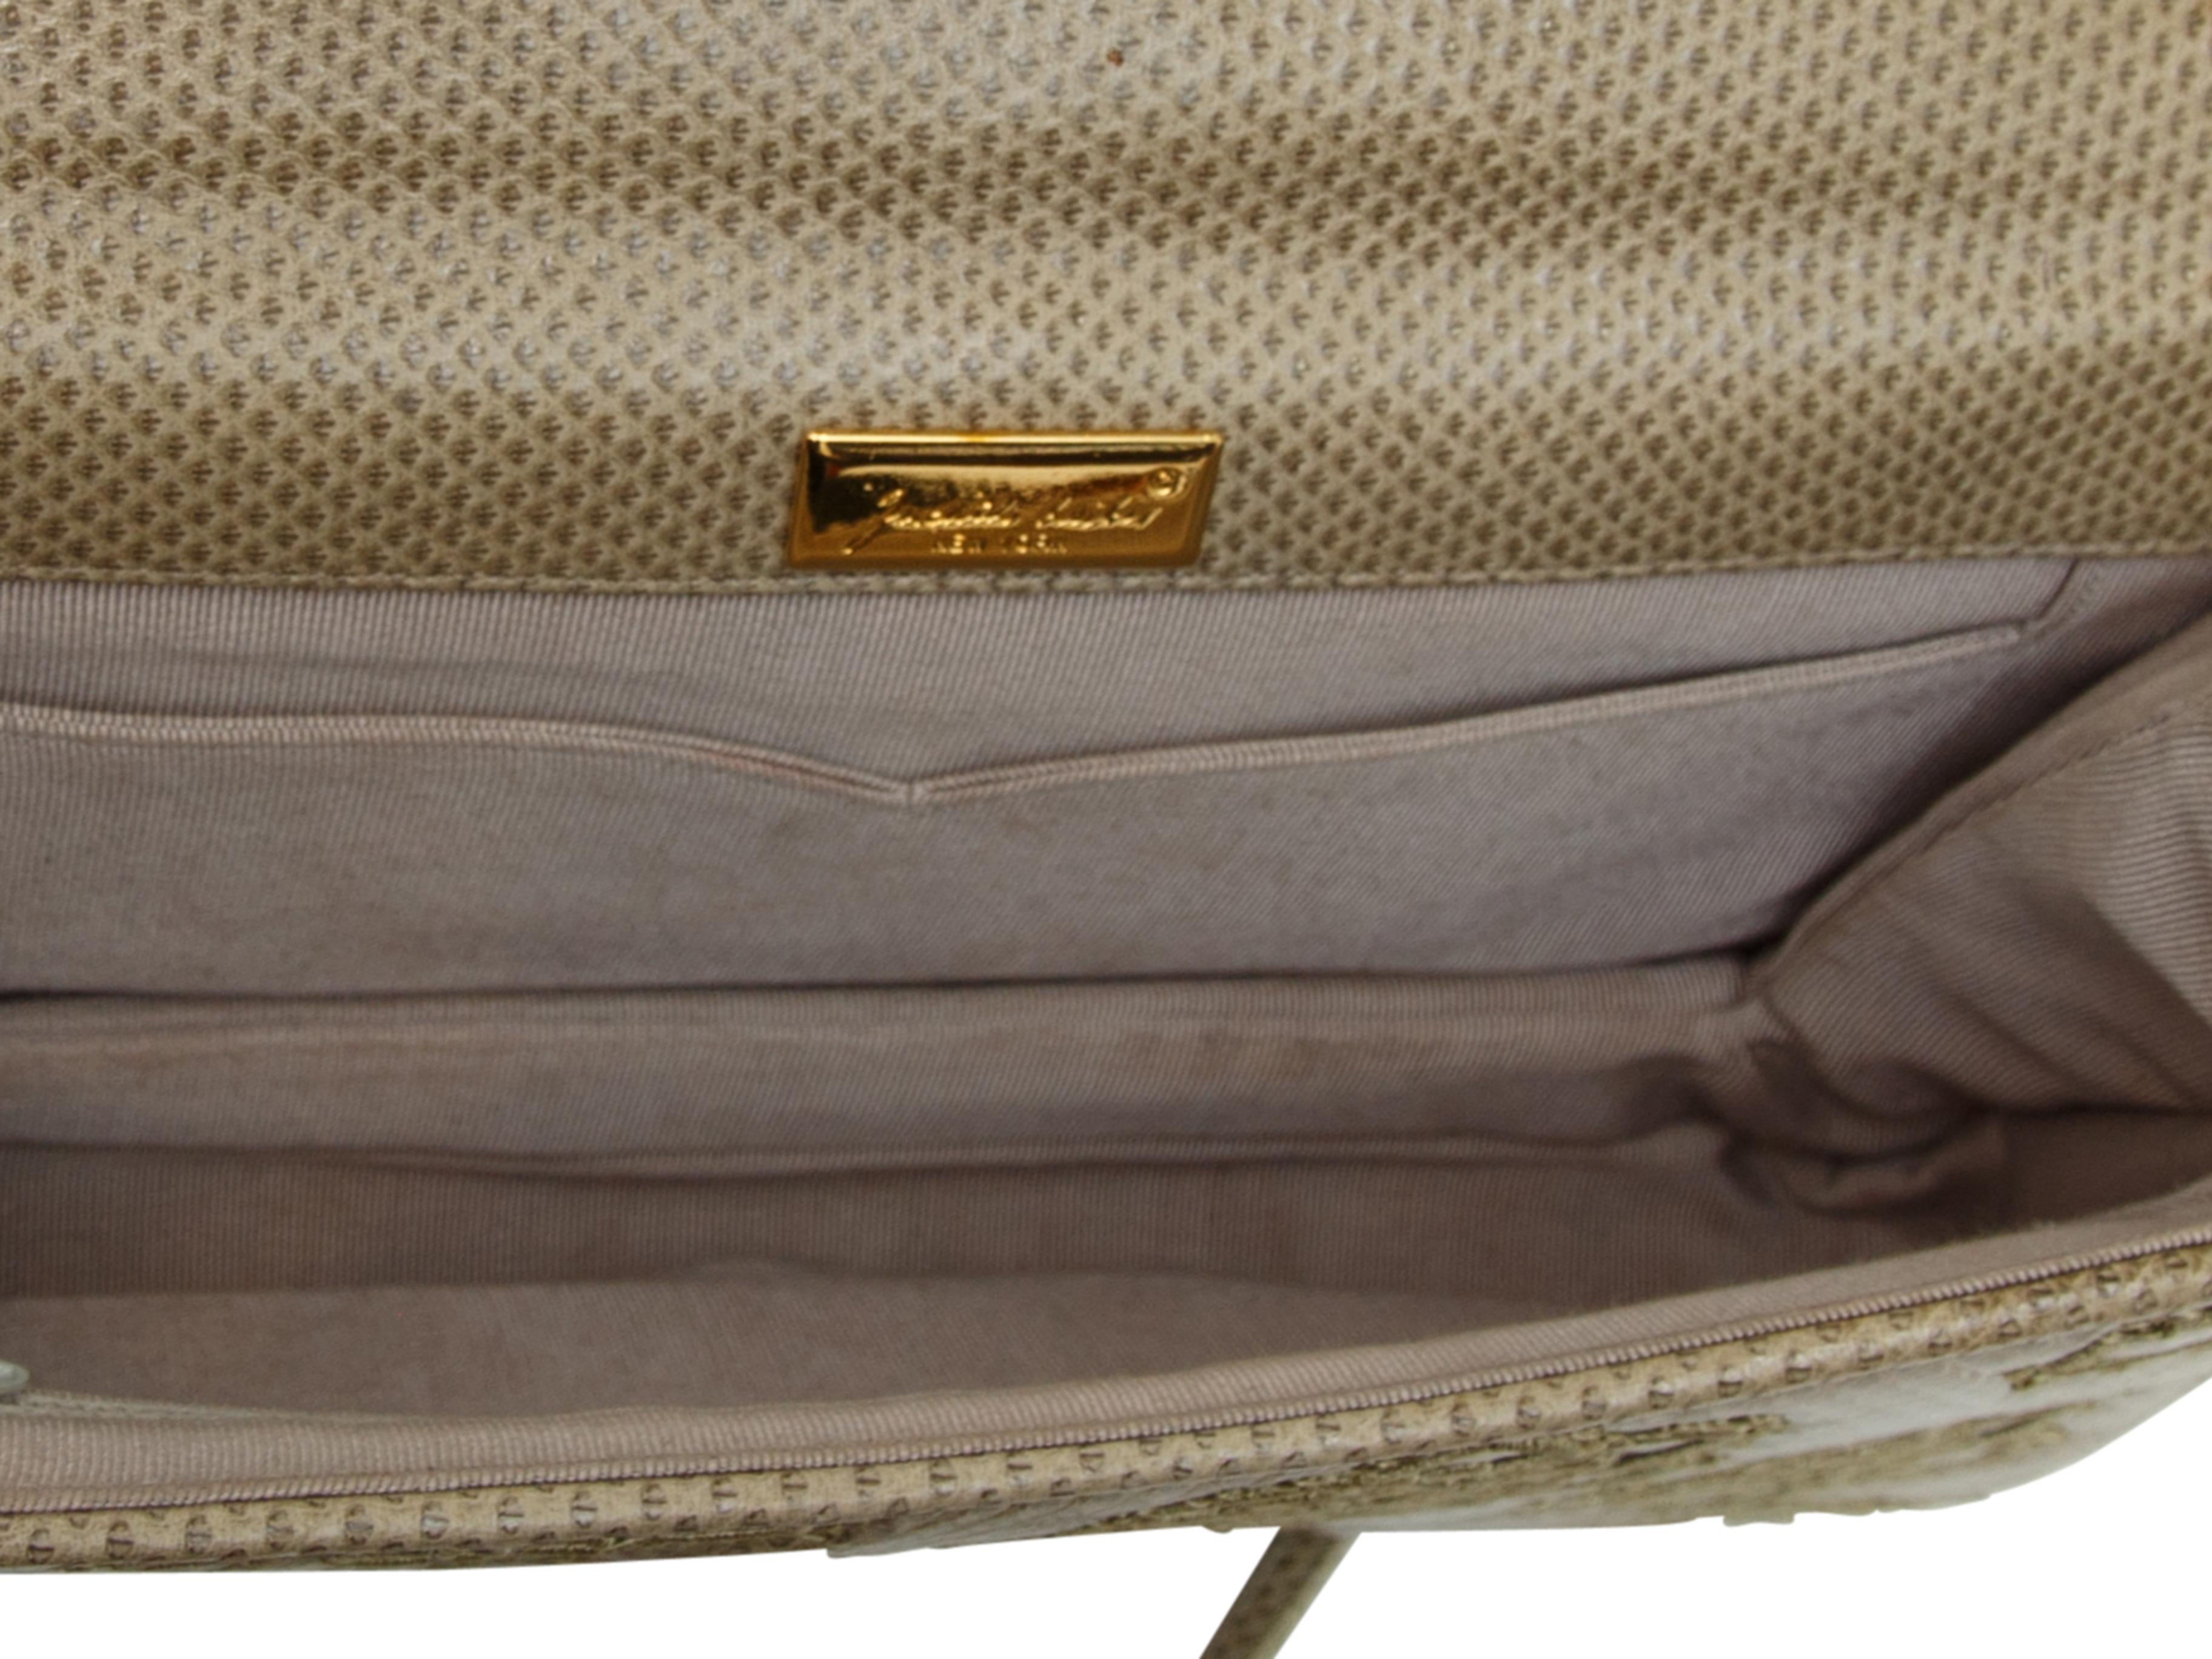 Product details: Beige karung shoulder bag by Judith Leiber. Tonal floral embroidery throughout. Gold-tone hardware. Detachable shoulder strap. Interior pocket. Tassel accent at side. Embellished closure at front. 9.5